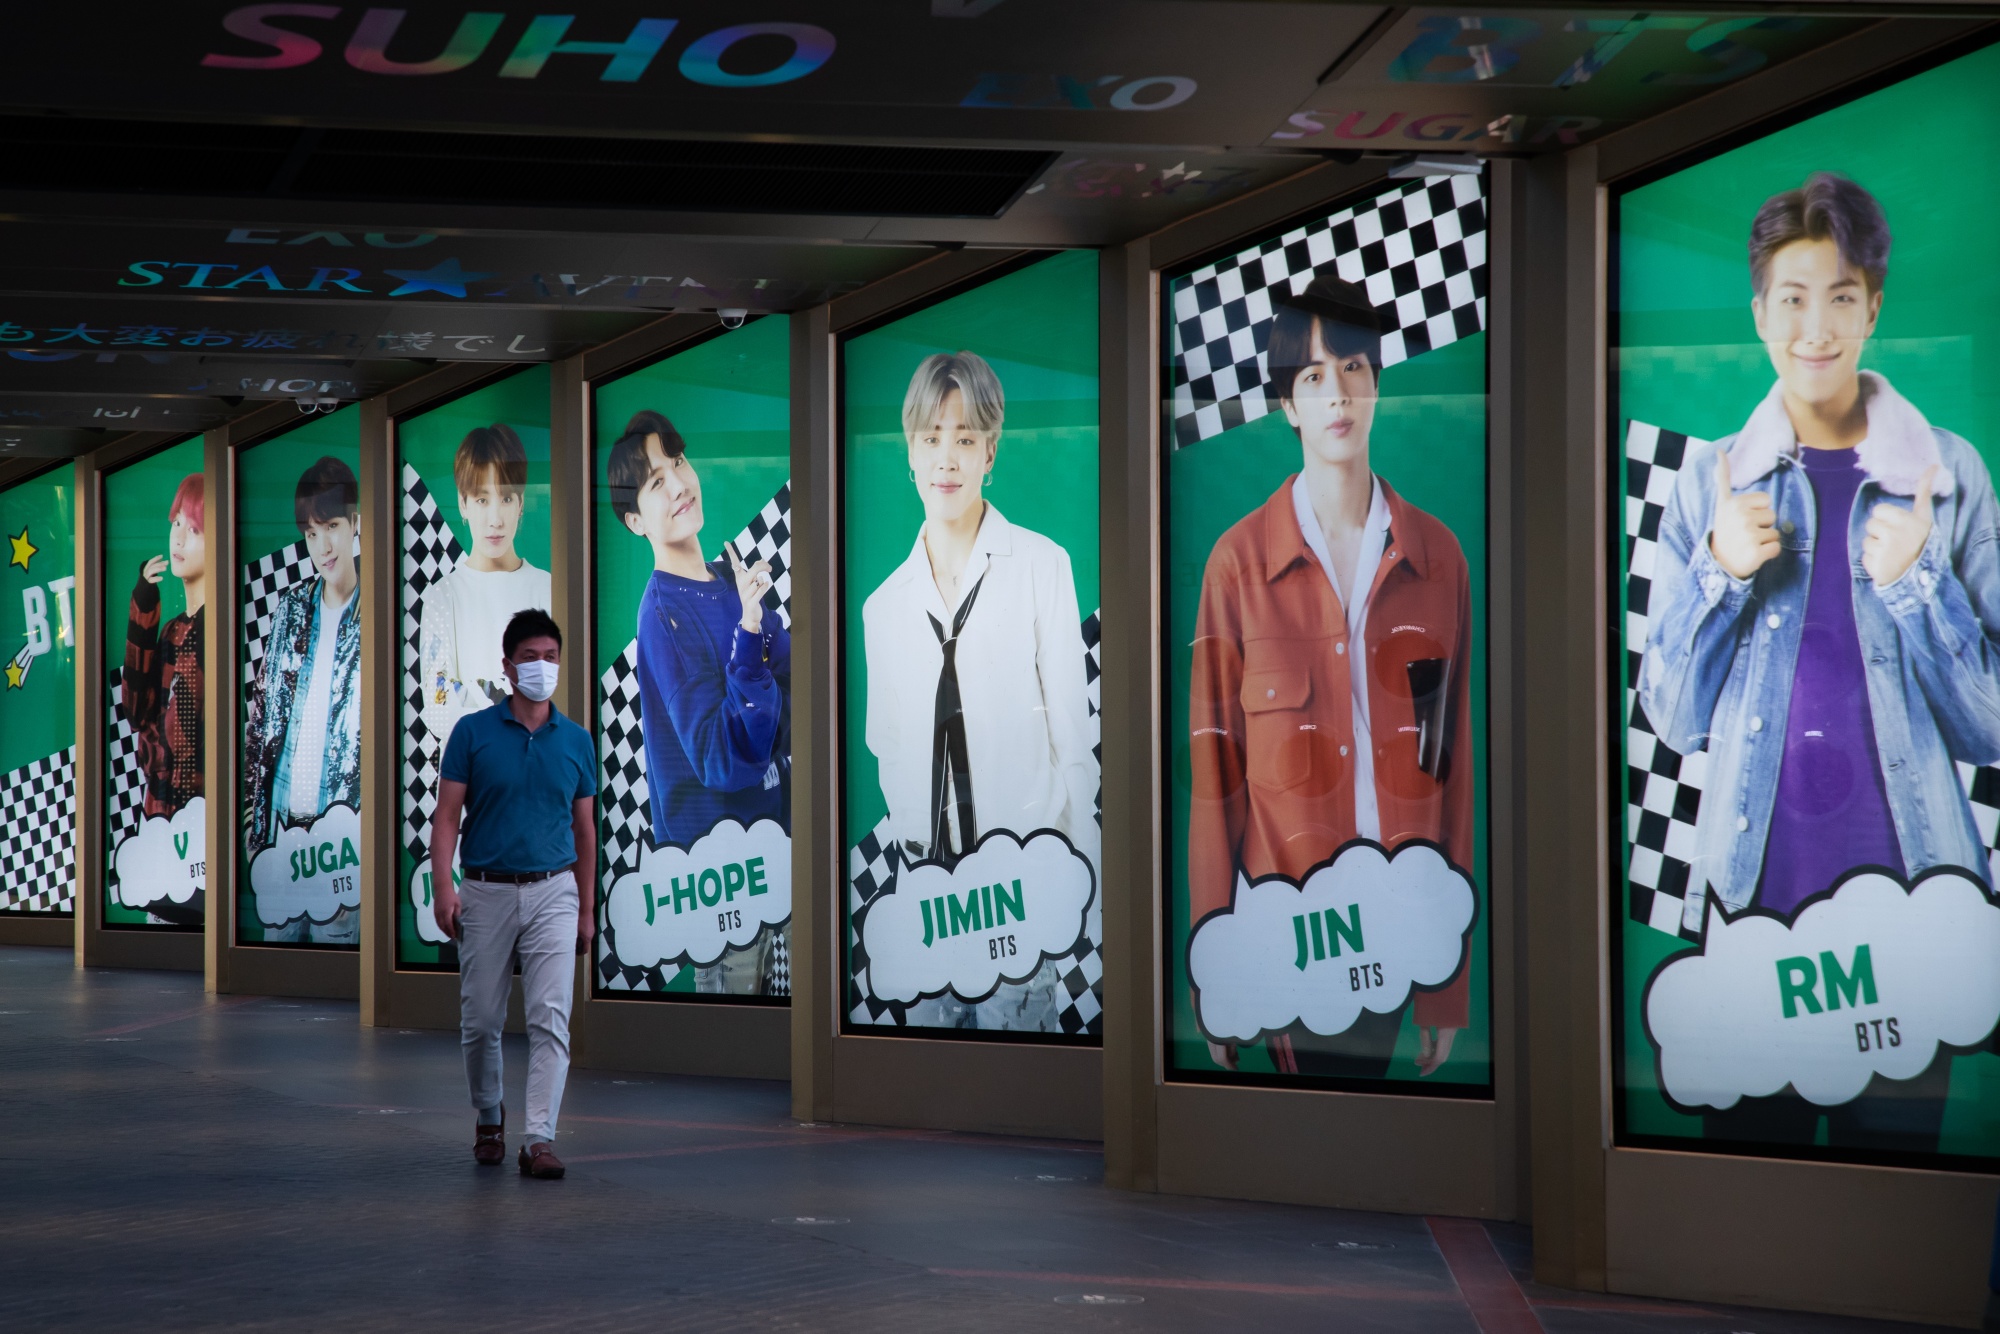 An advertisement for&nbsp;BTS&nbsp;in Seoul.